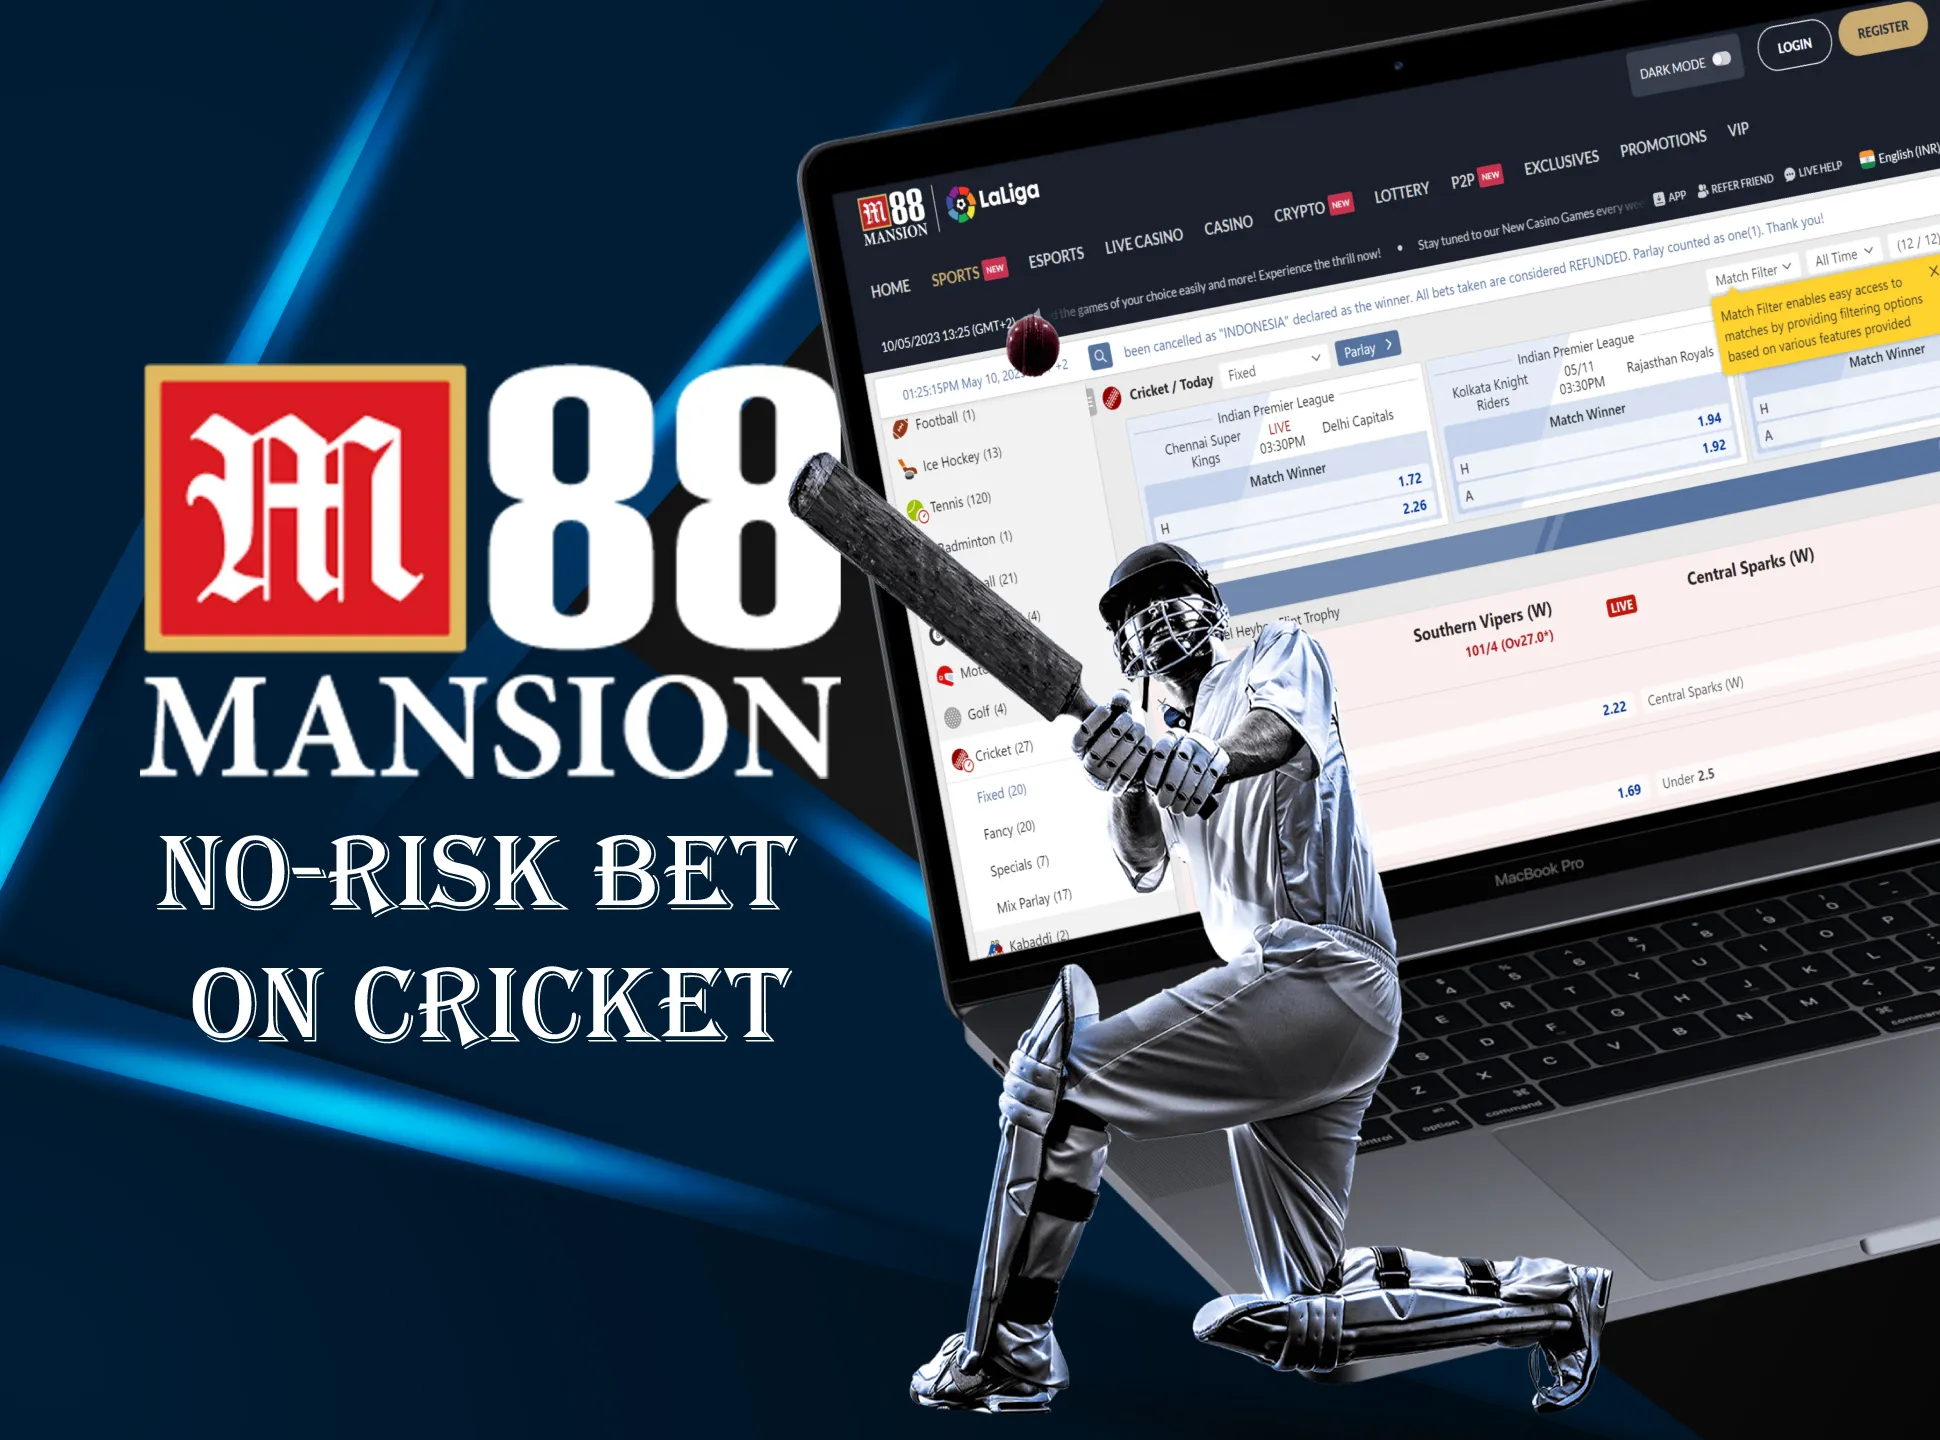 Make no-risk bets on cricket at M88.